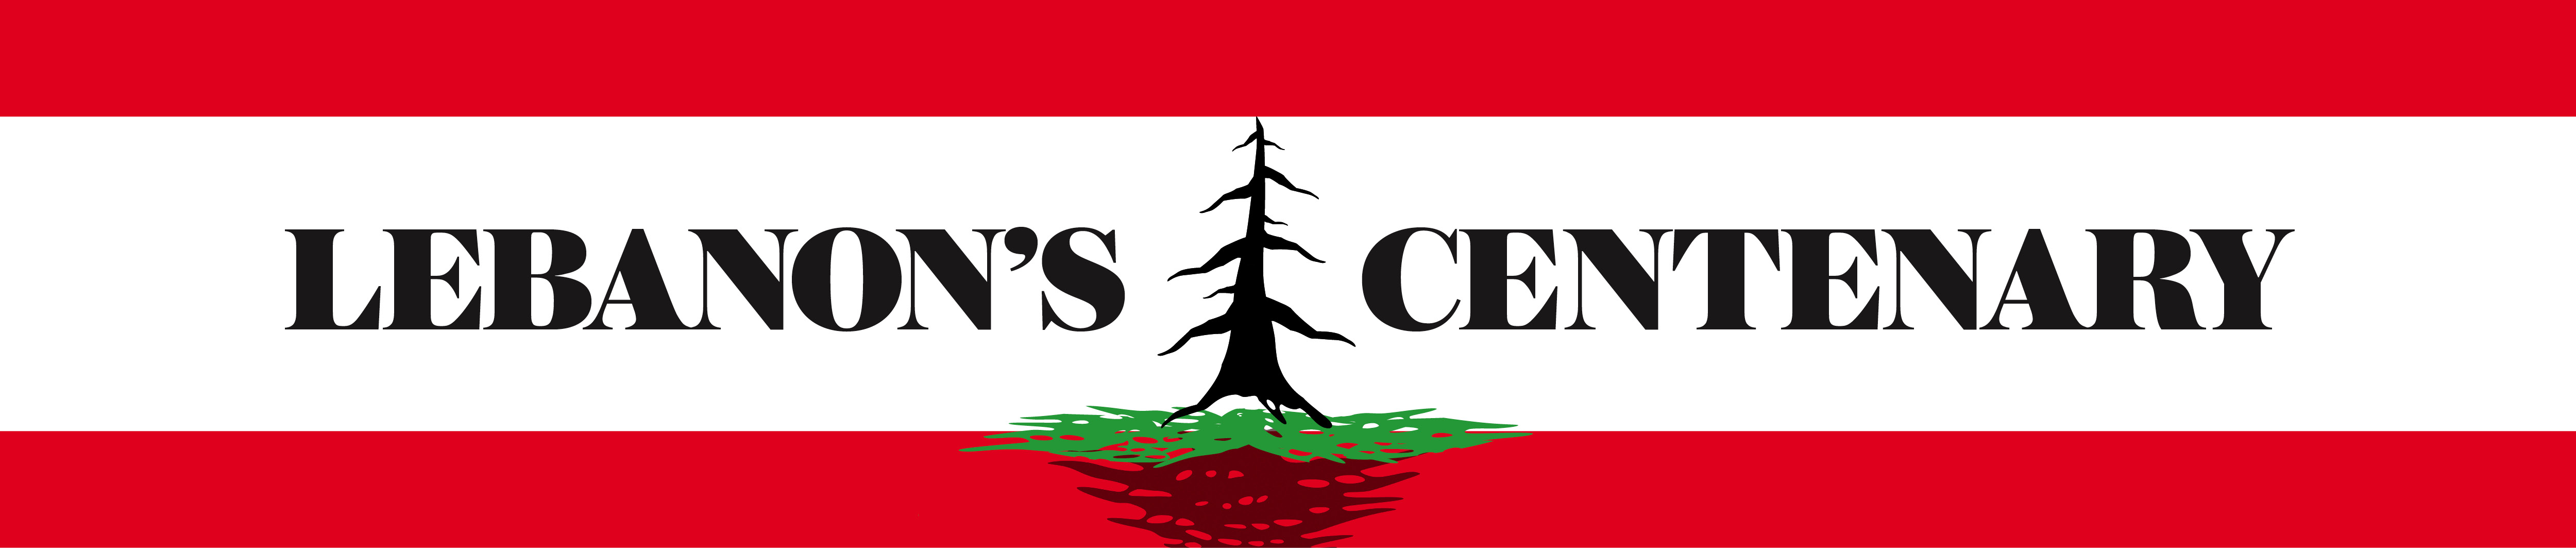 Greater Lebanon